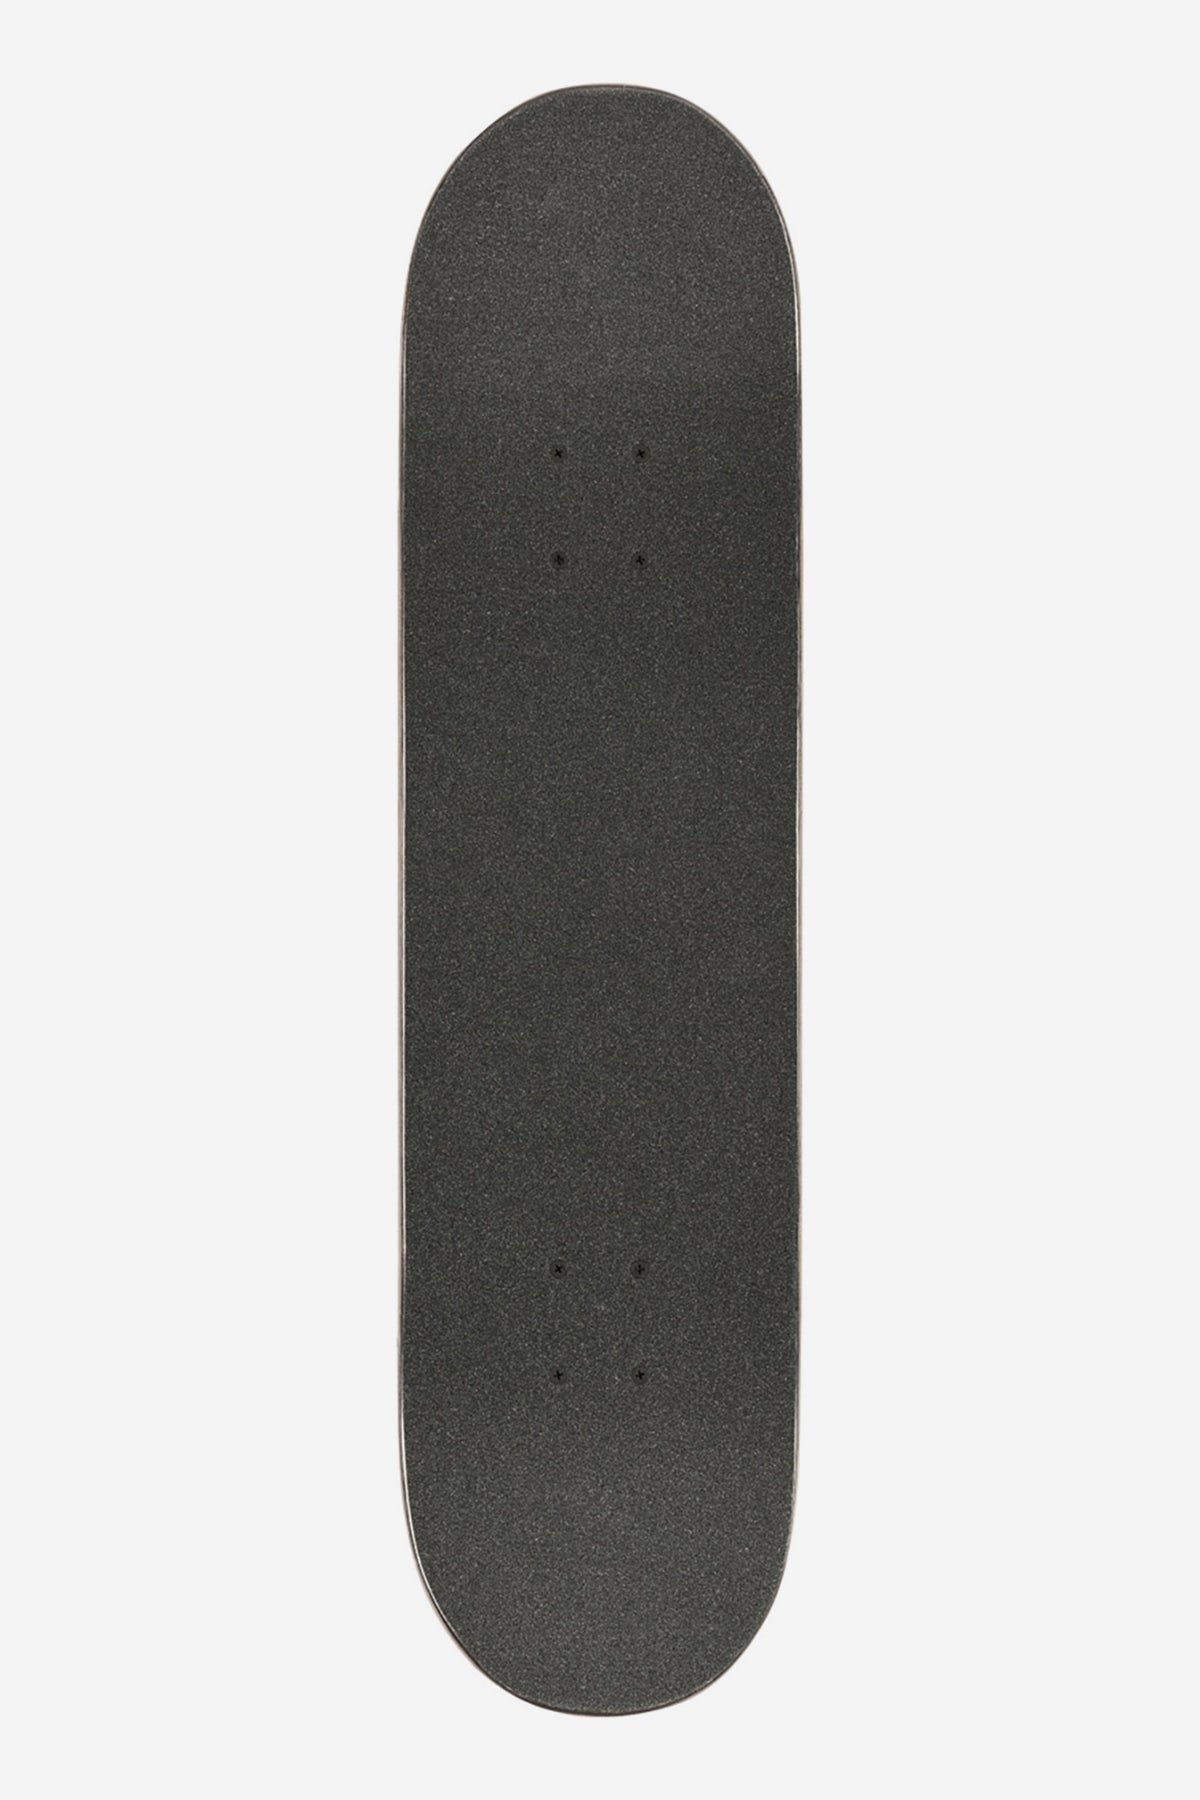 Globe - Goodstock - Off White - 8.0" Completo Skateboard